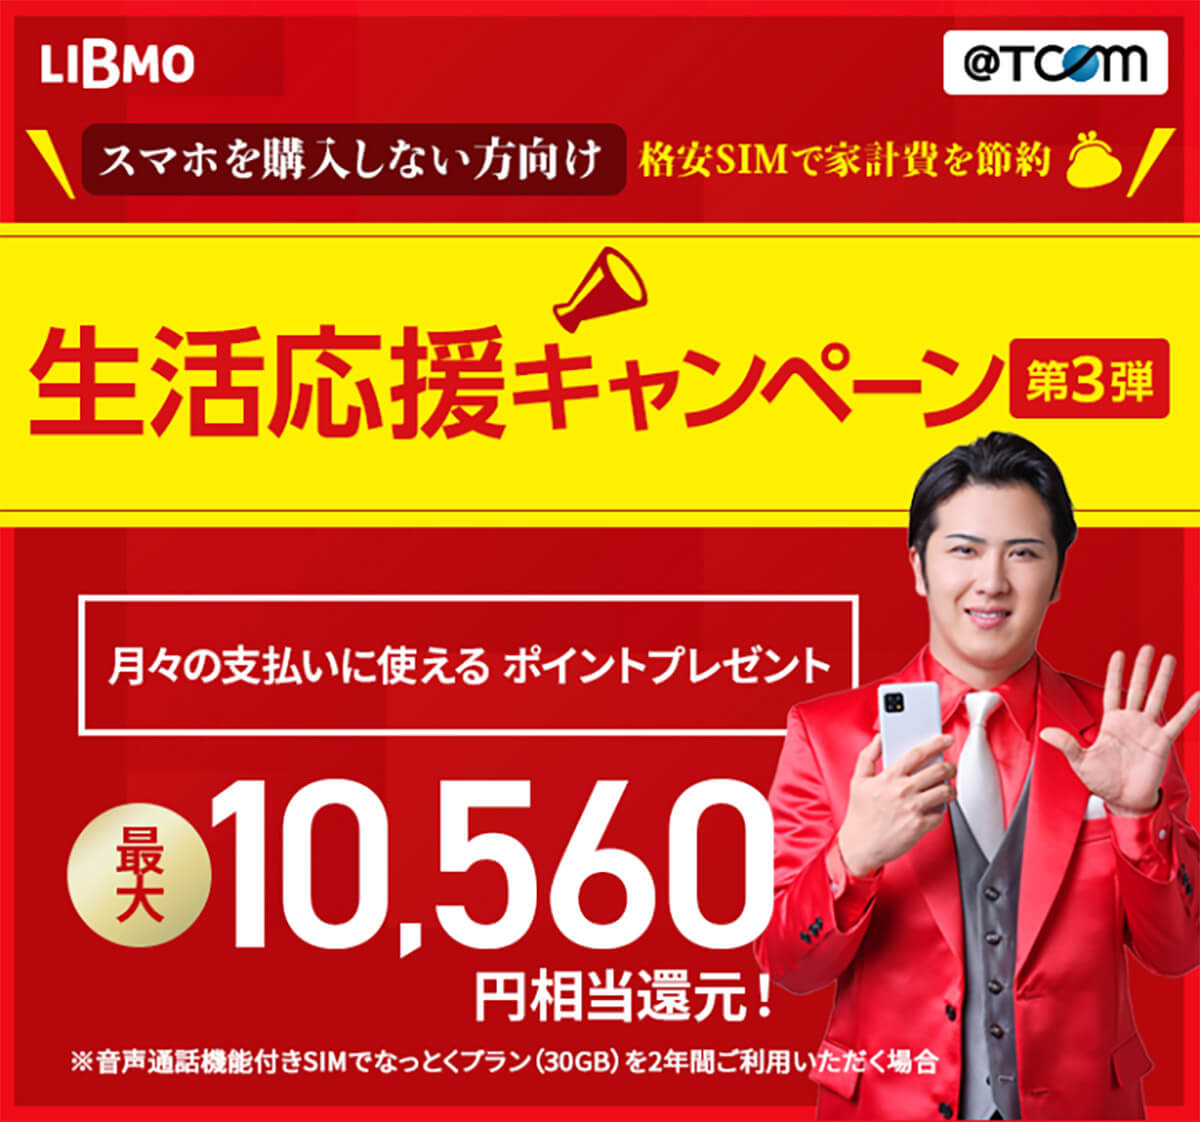 「LIBMO」は生活応援キャンペーン第3弾で最大1万560ポイント還元！3